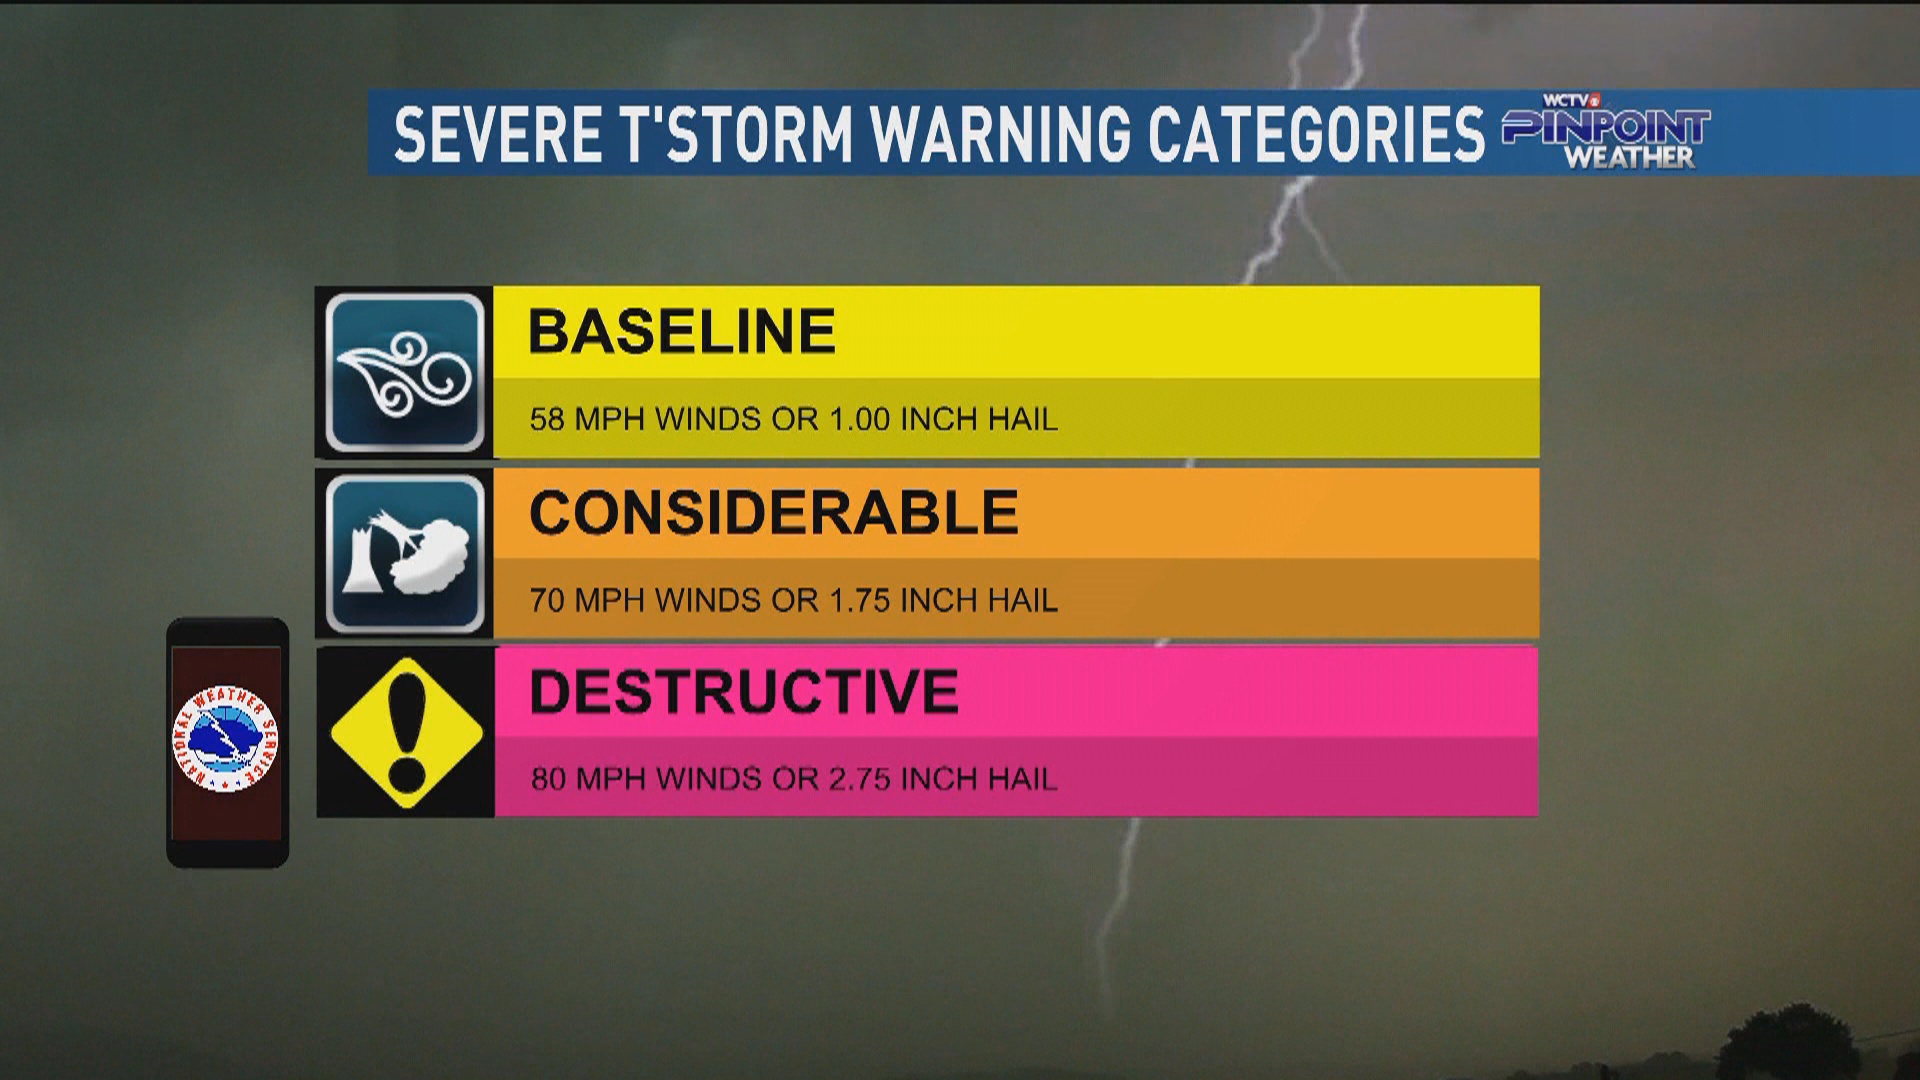 severe thunderstorm warning text